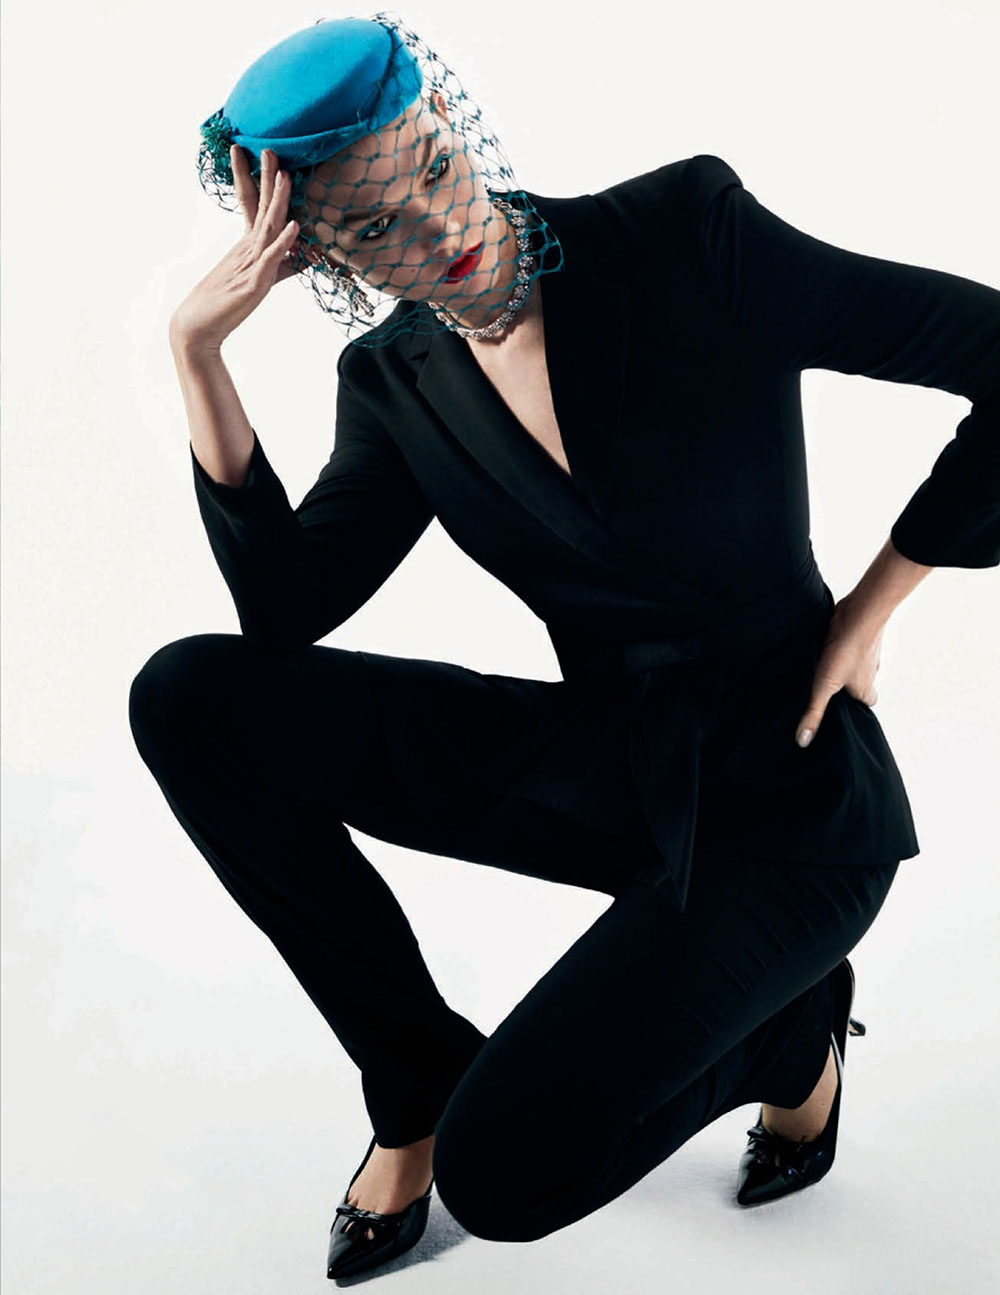 Karlie Kloss covers Vogue Spain December 2019 by Txema Yeste